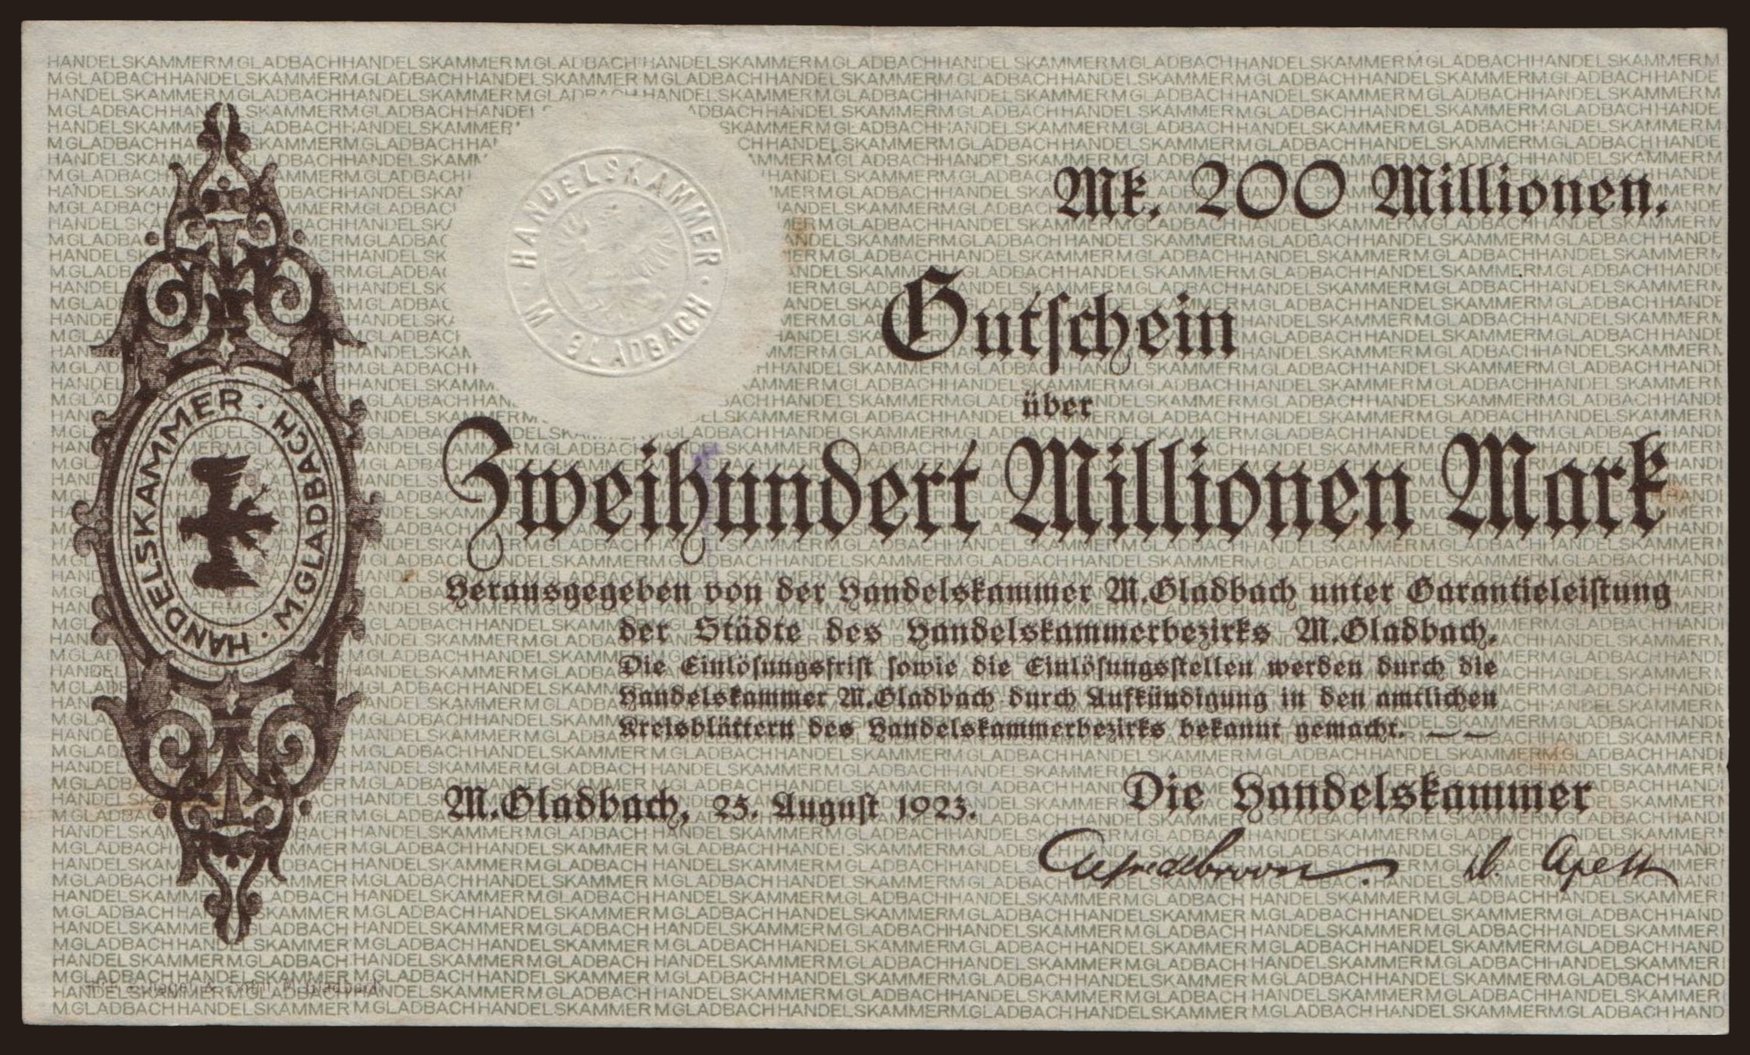 München-Gladbach/ Handelskammer, 200.000.000 mark, 1923